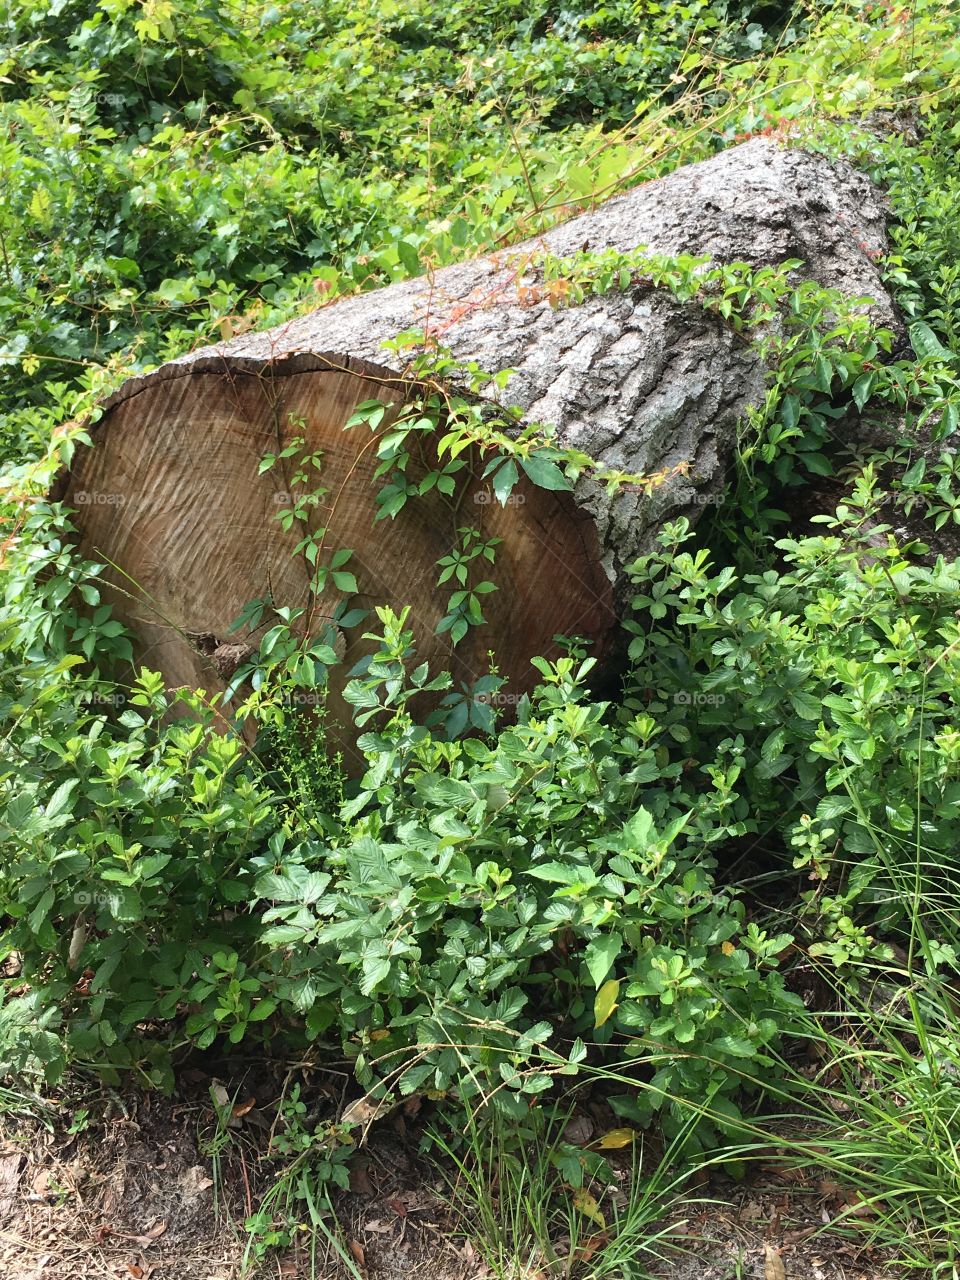 Overgrown log